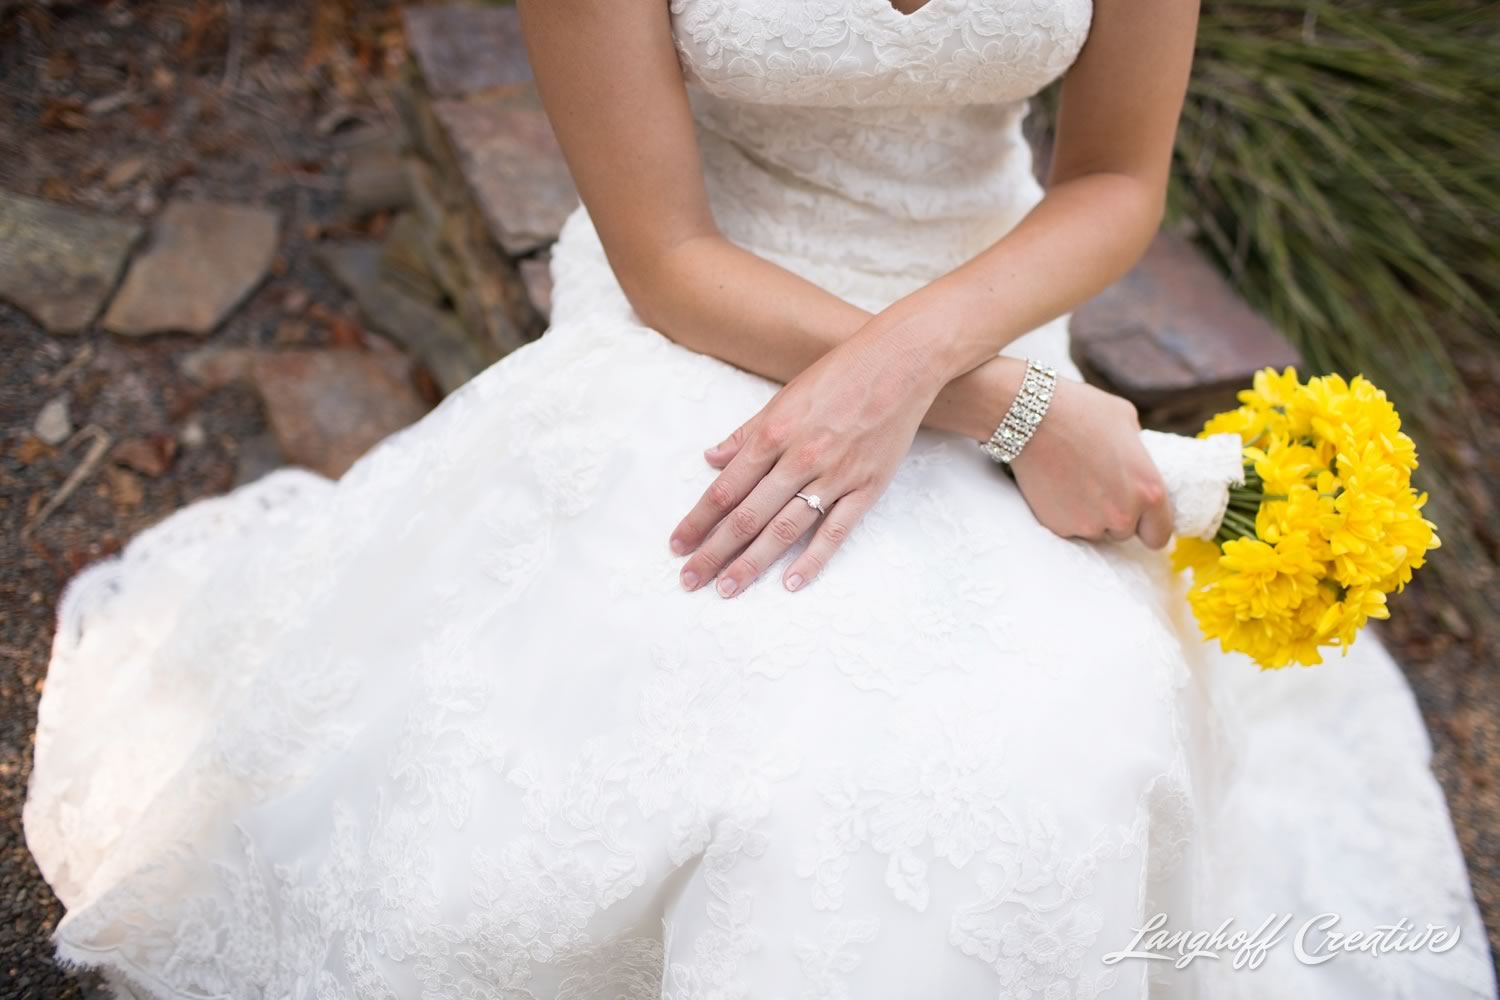 BridalSession-Bridals-RaleighBride-NCbride-JCRaulstonArboretum-RaleighWedding-WeddingPhotographer-LanghoffCreative-Amy2015-Bride-7-photo.jpg